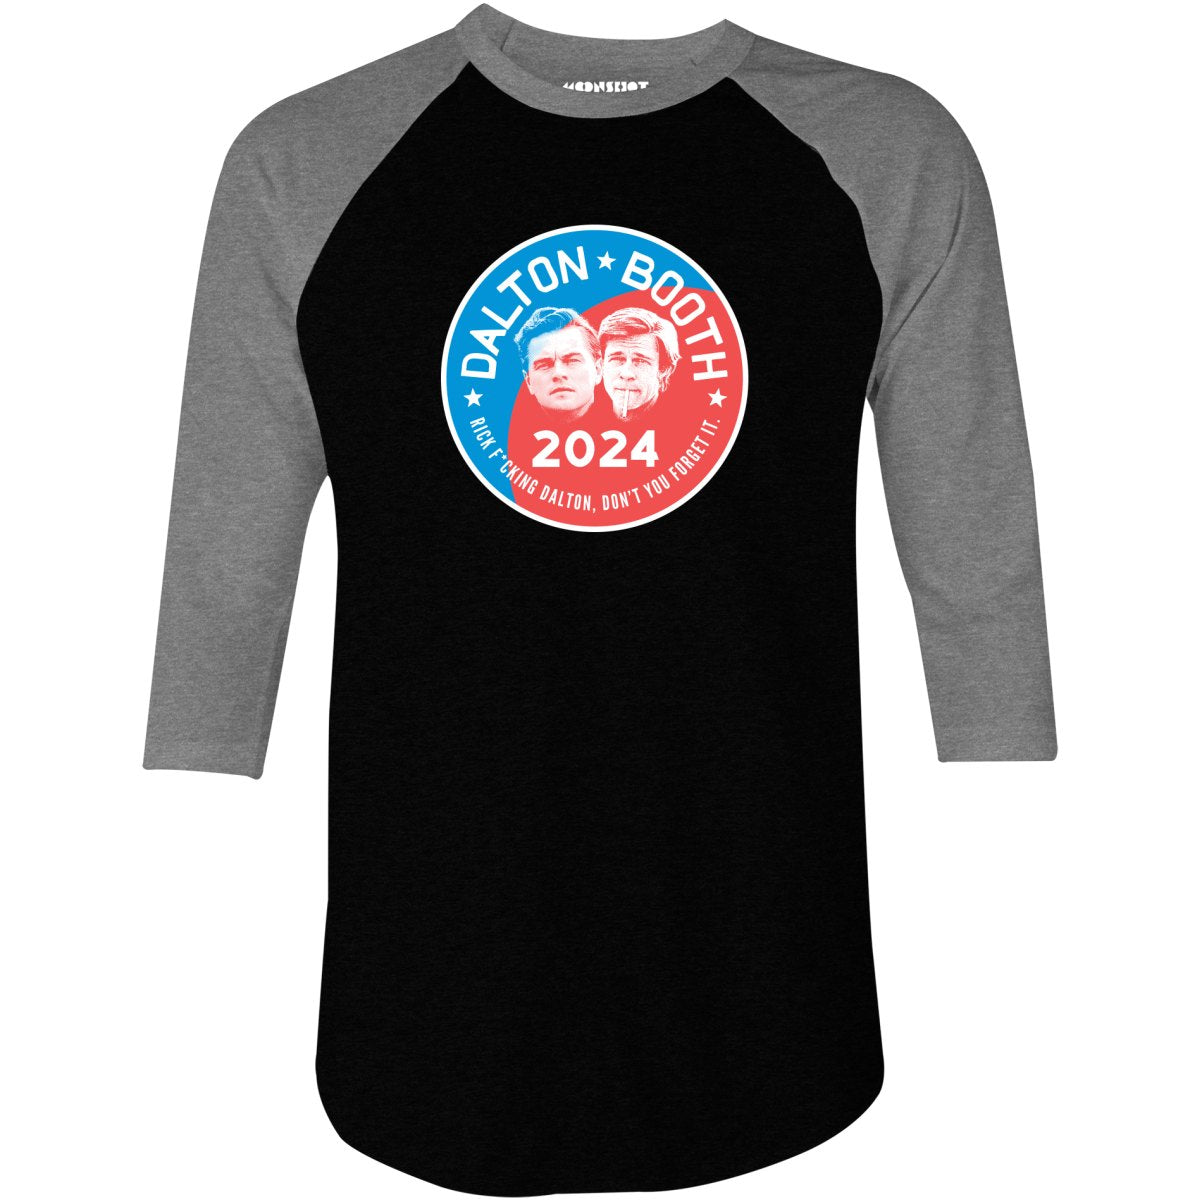 Dalton Booth 2024 - 3/4 Sleeve Raglan T-Shirt